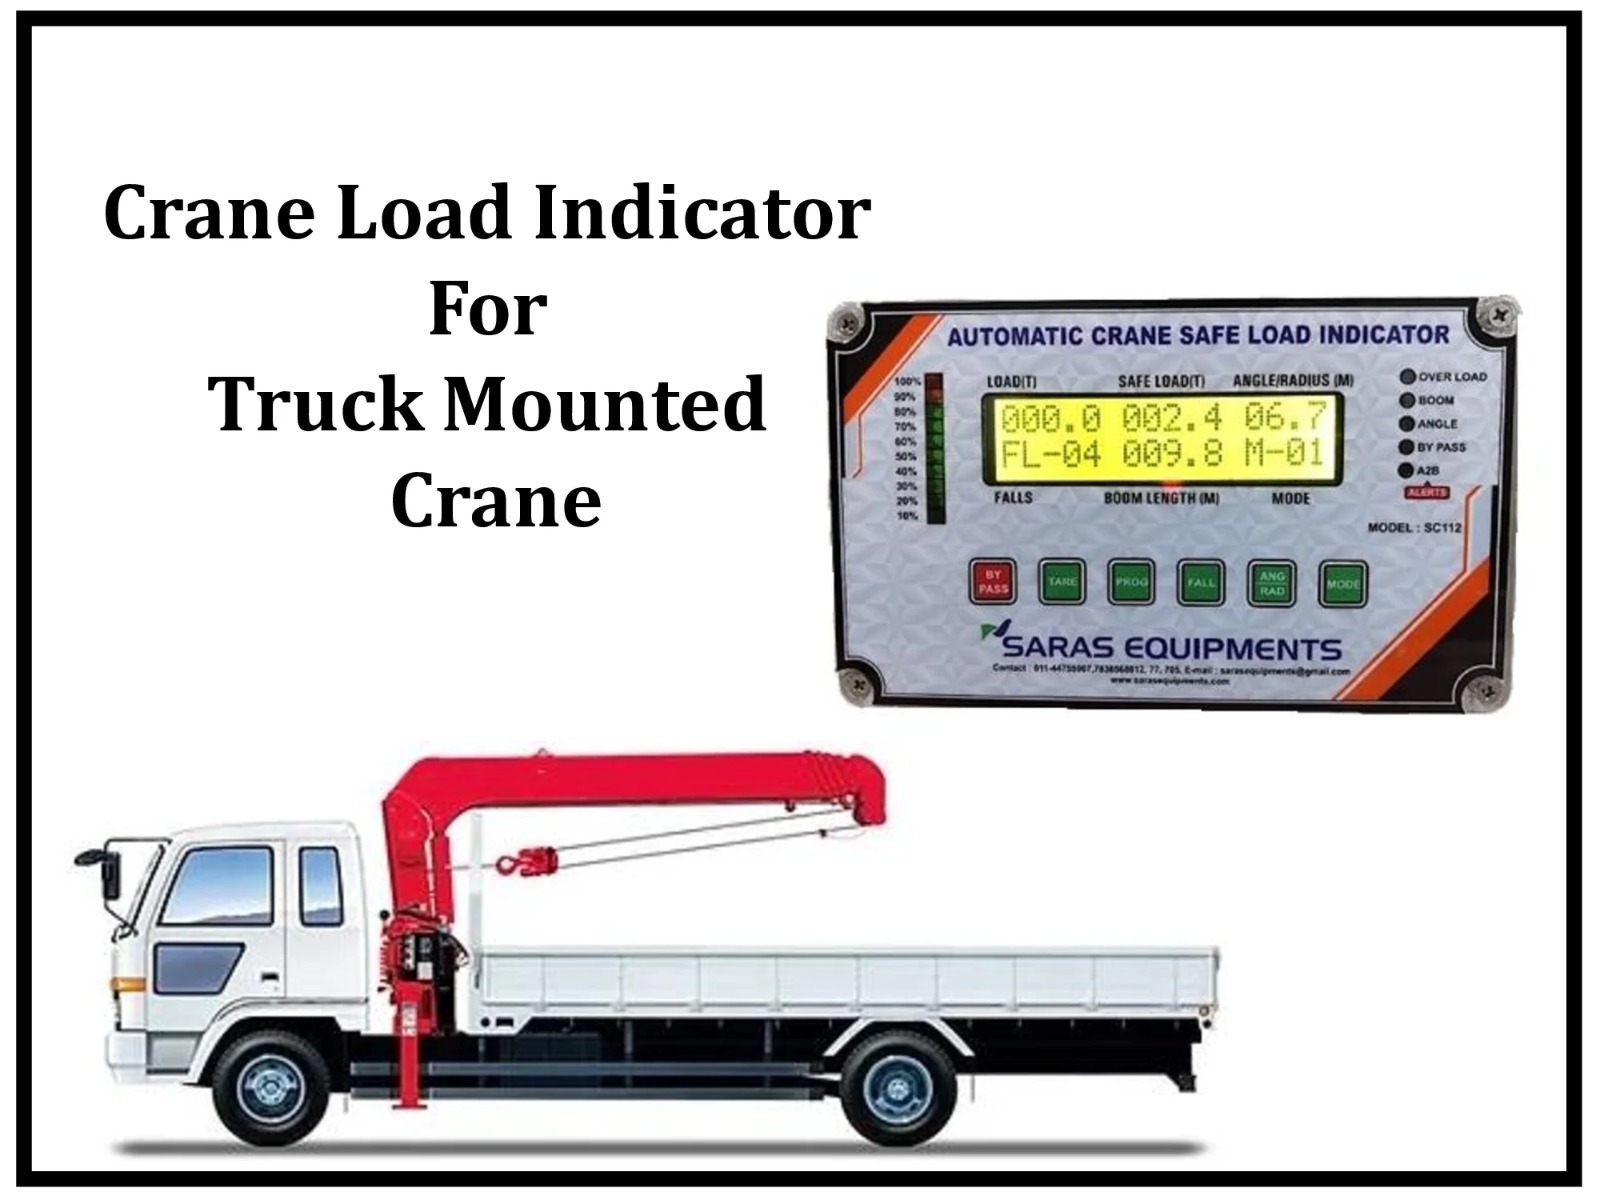 Crane Safe Load Indicator for Truck Mounted Crane